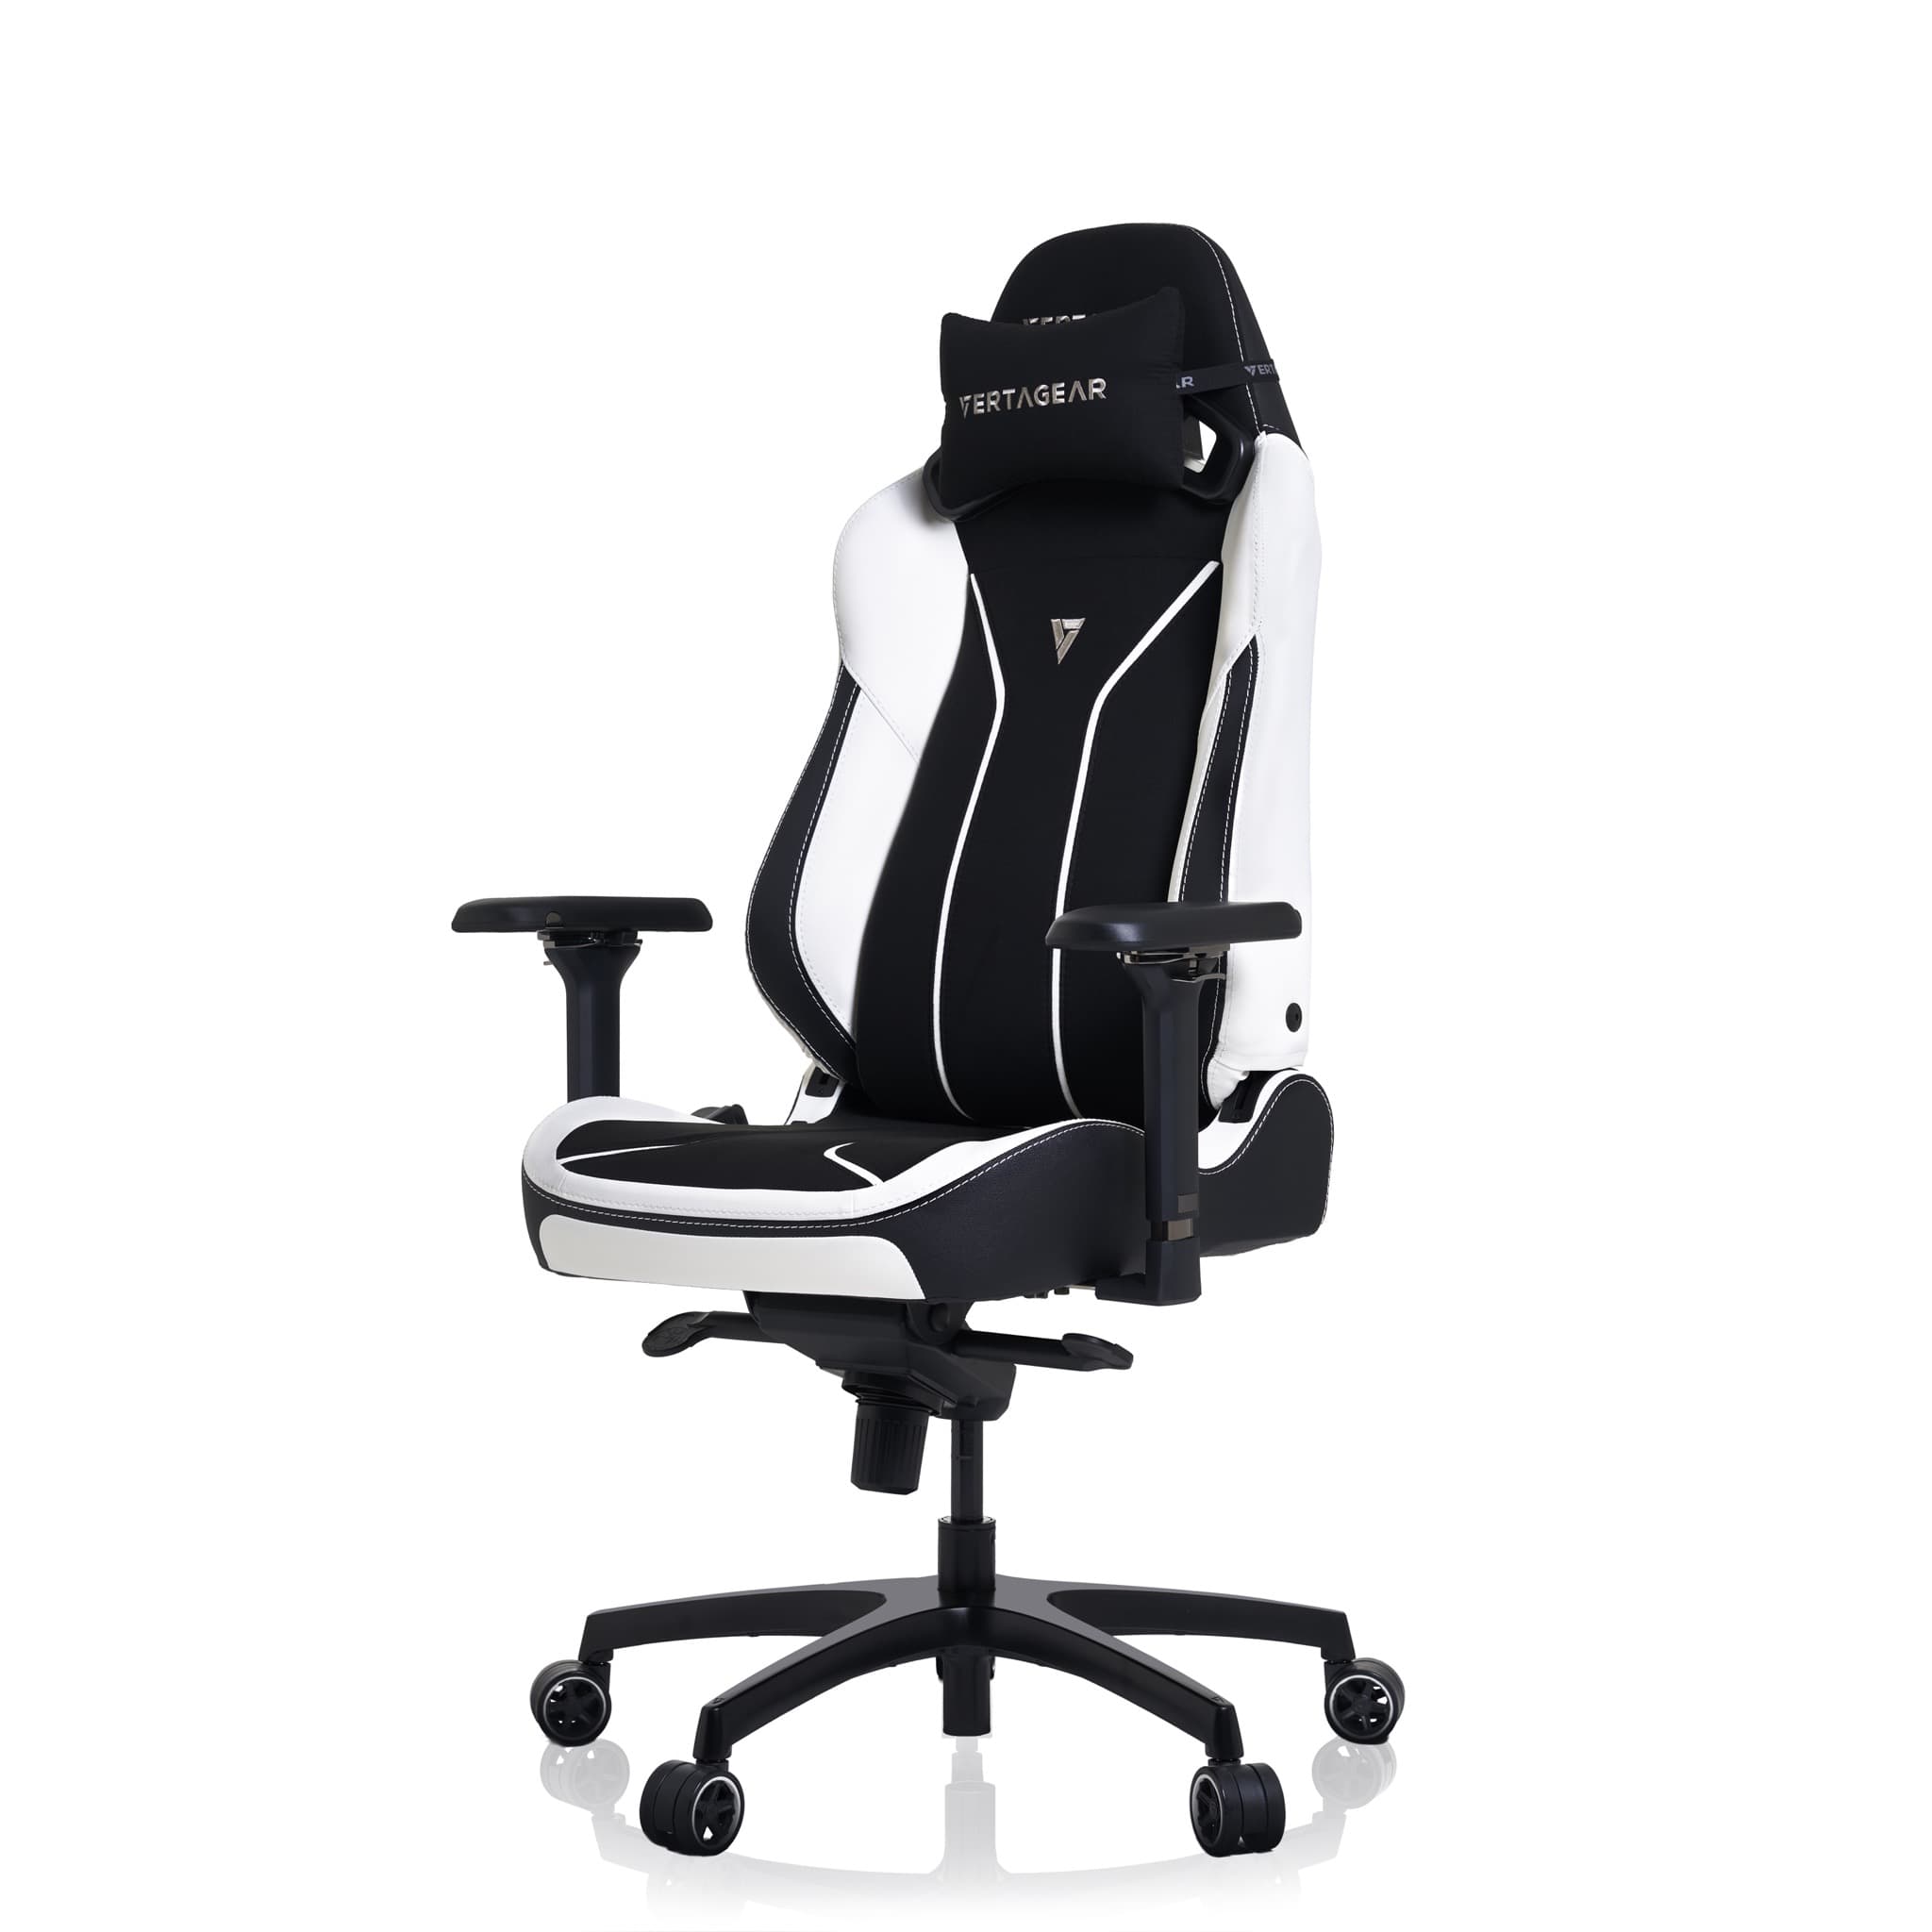 Alienware S5800 Ergonomic Gaming Chair